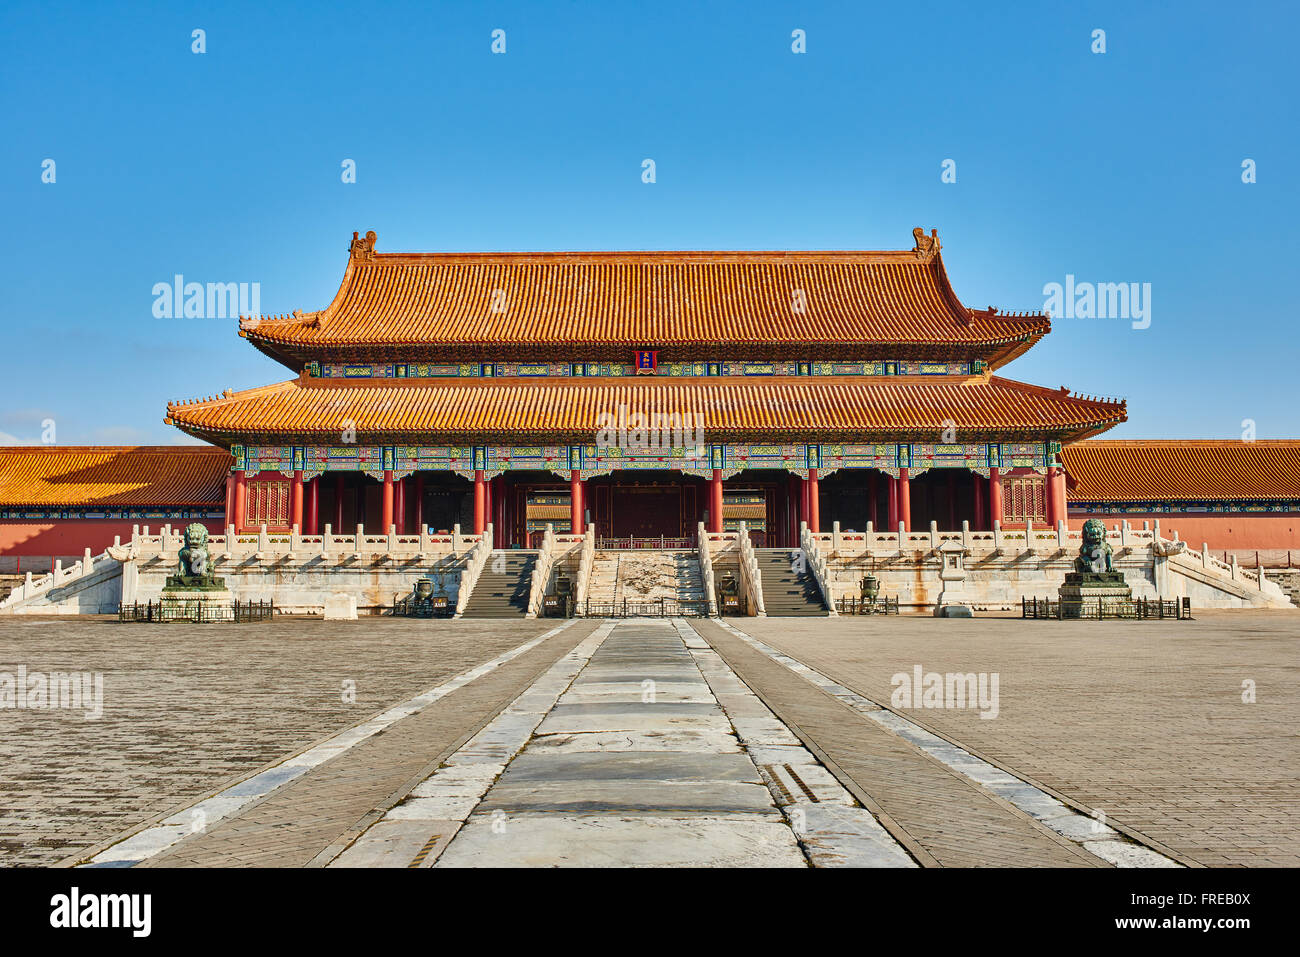 Taihemen gate of supreme harmony imperial palace Forbidden City of Beijing China Stock Photo